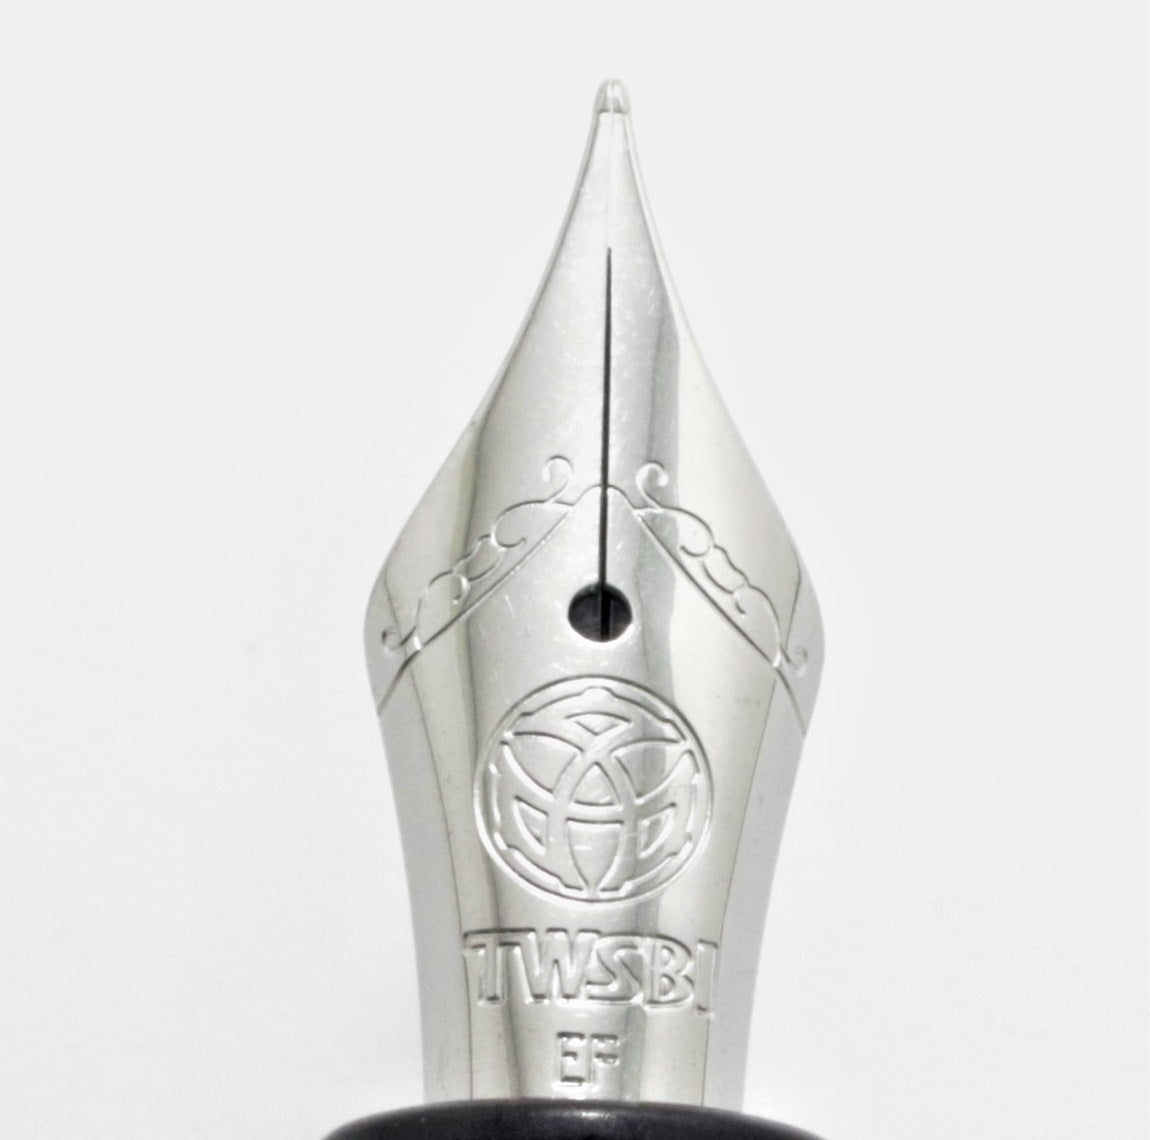 [TWSBI] Diamond 580 RBT Fountain Pen